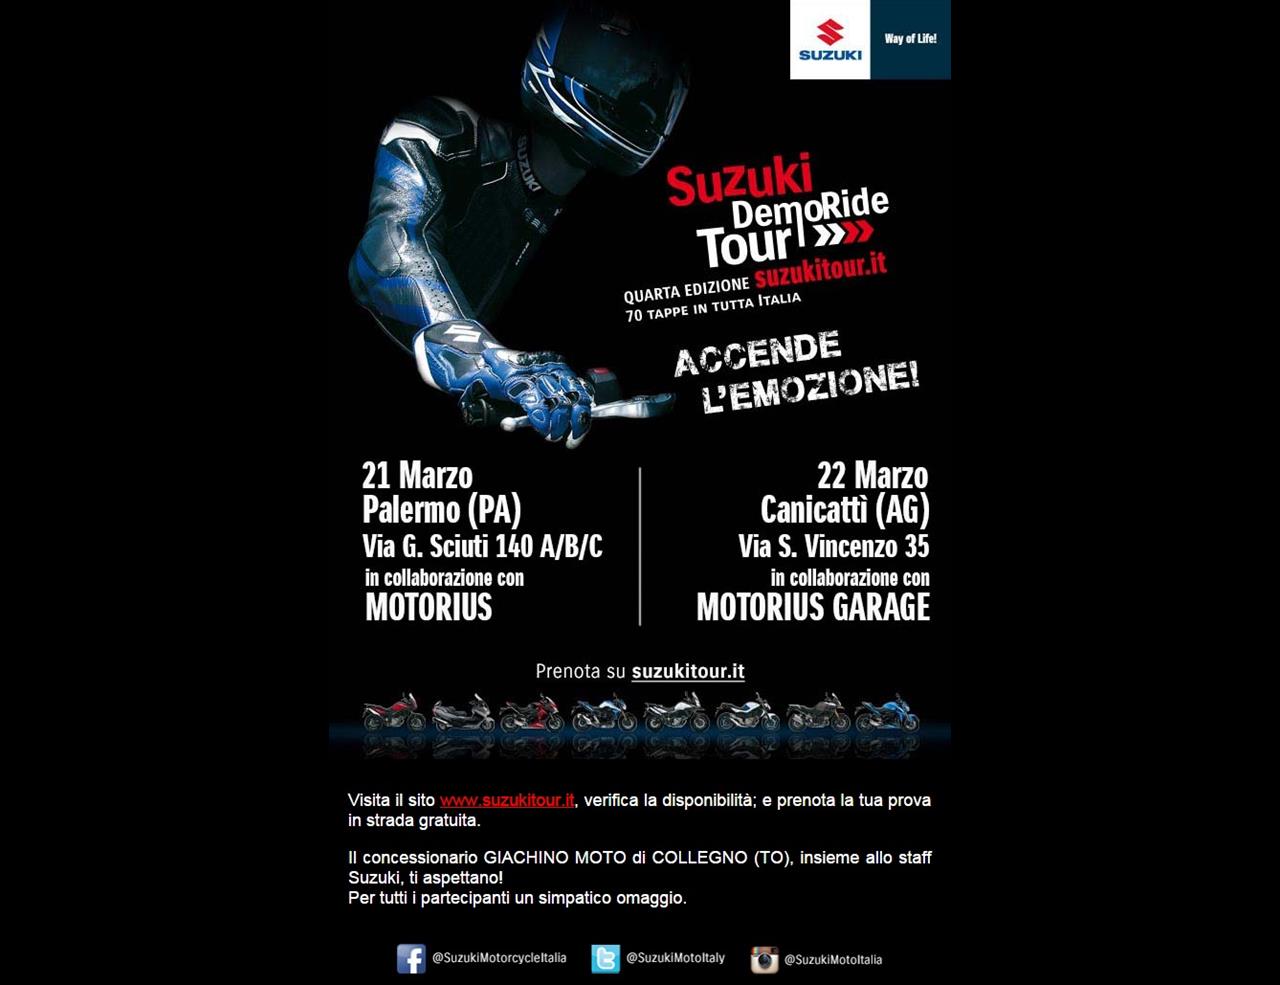 Suzuki V-Strom Tour 2015: si parte - image 001198-000021338 on https://moto.motori.net